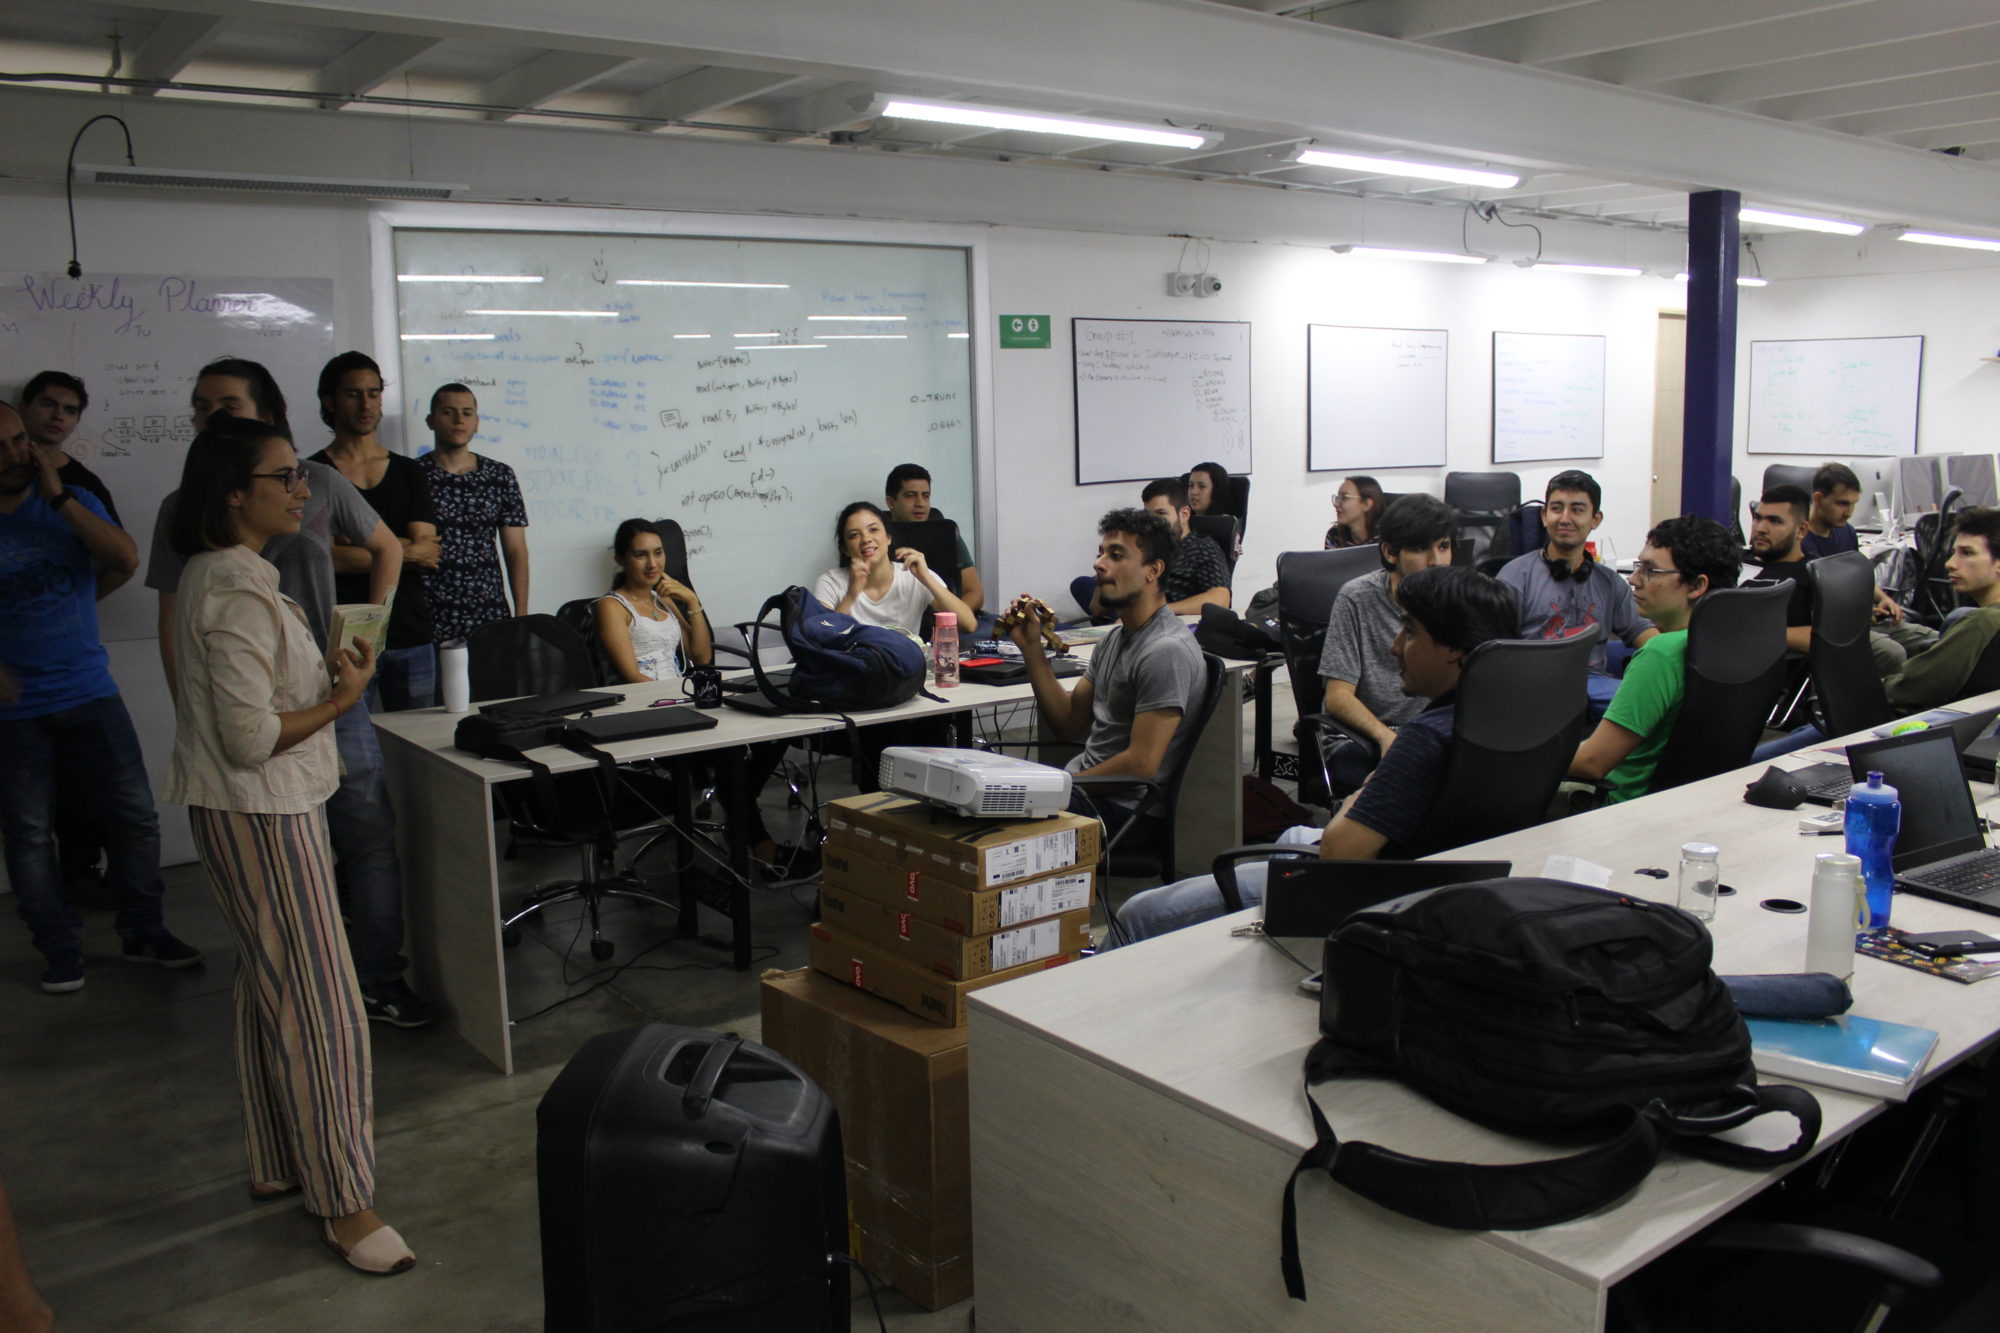 Holberton School Medellín: Training the next generation of software engineers